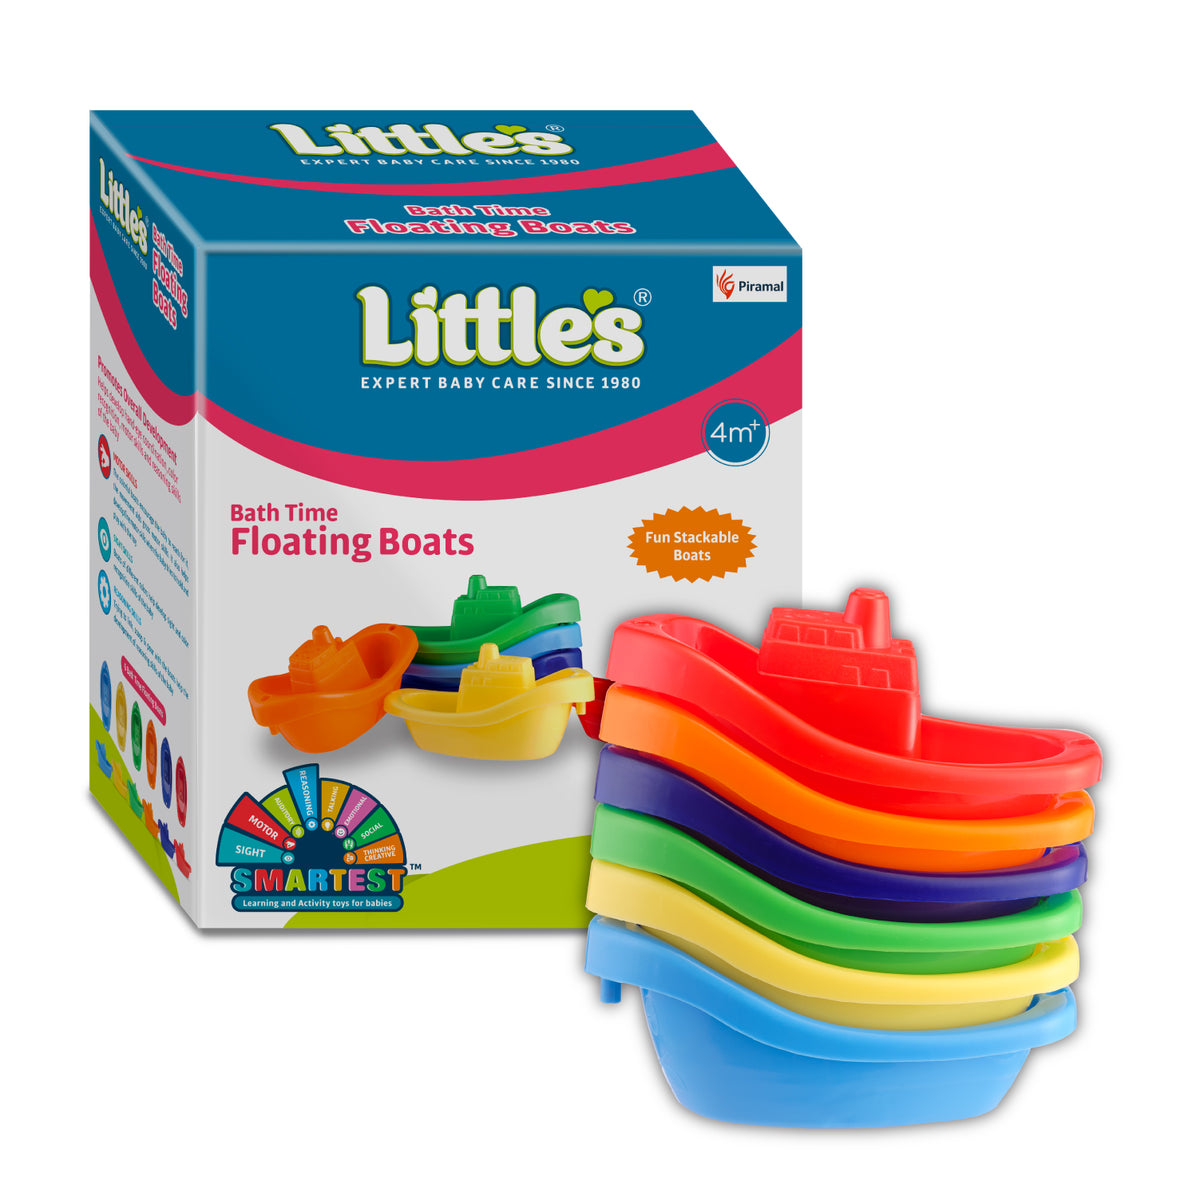 Little’s Bath Time Floating Boats l Bath Toy for babies l Educational & Developmental Toys I Infant & Preschool Toys I 6 pieces, Multi-color